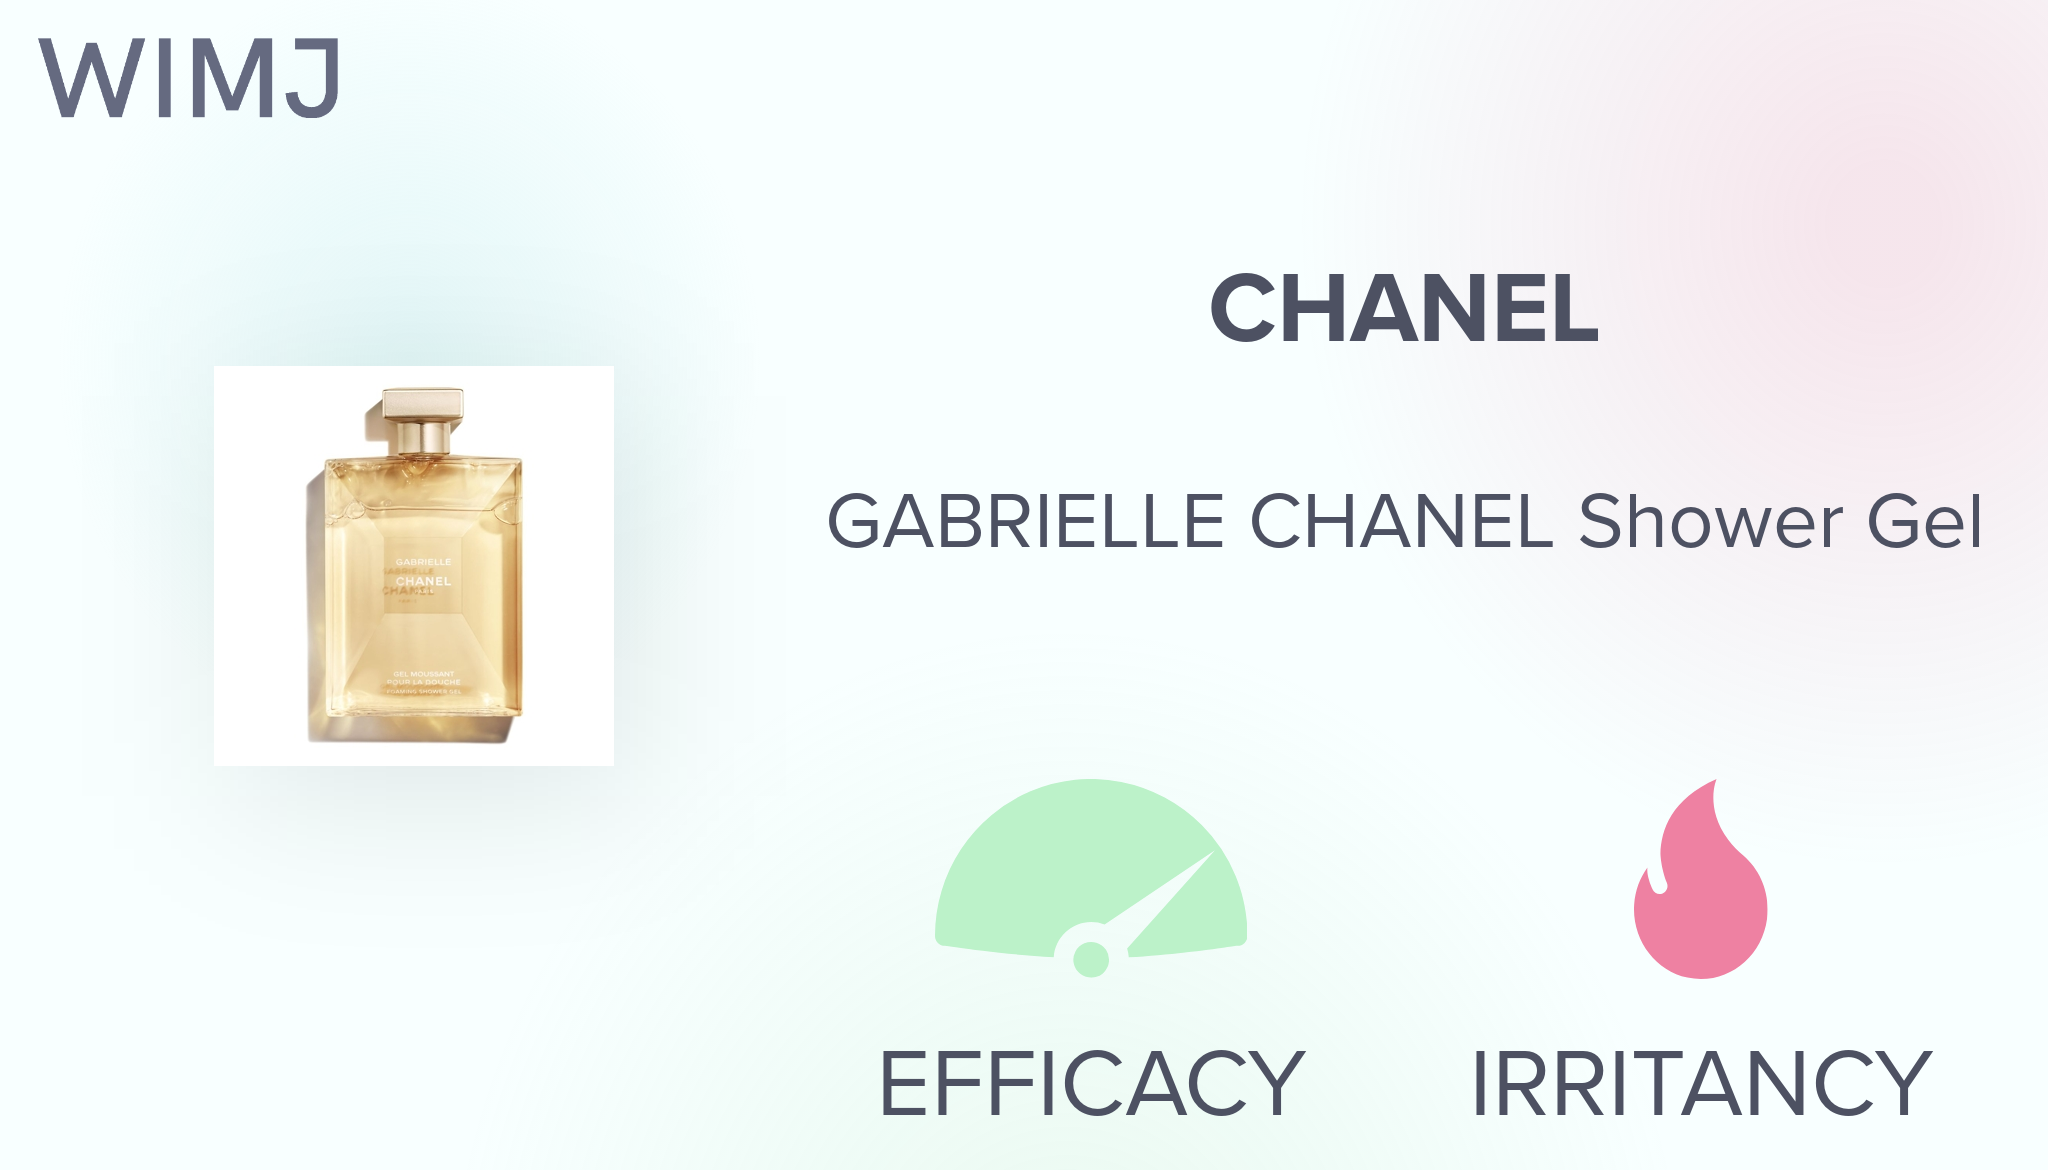 Review: CHANEL - GABRIELLE CHANEL Shower Gel - WIMJ